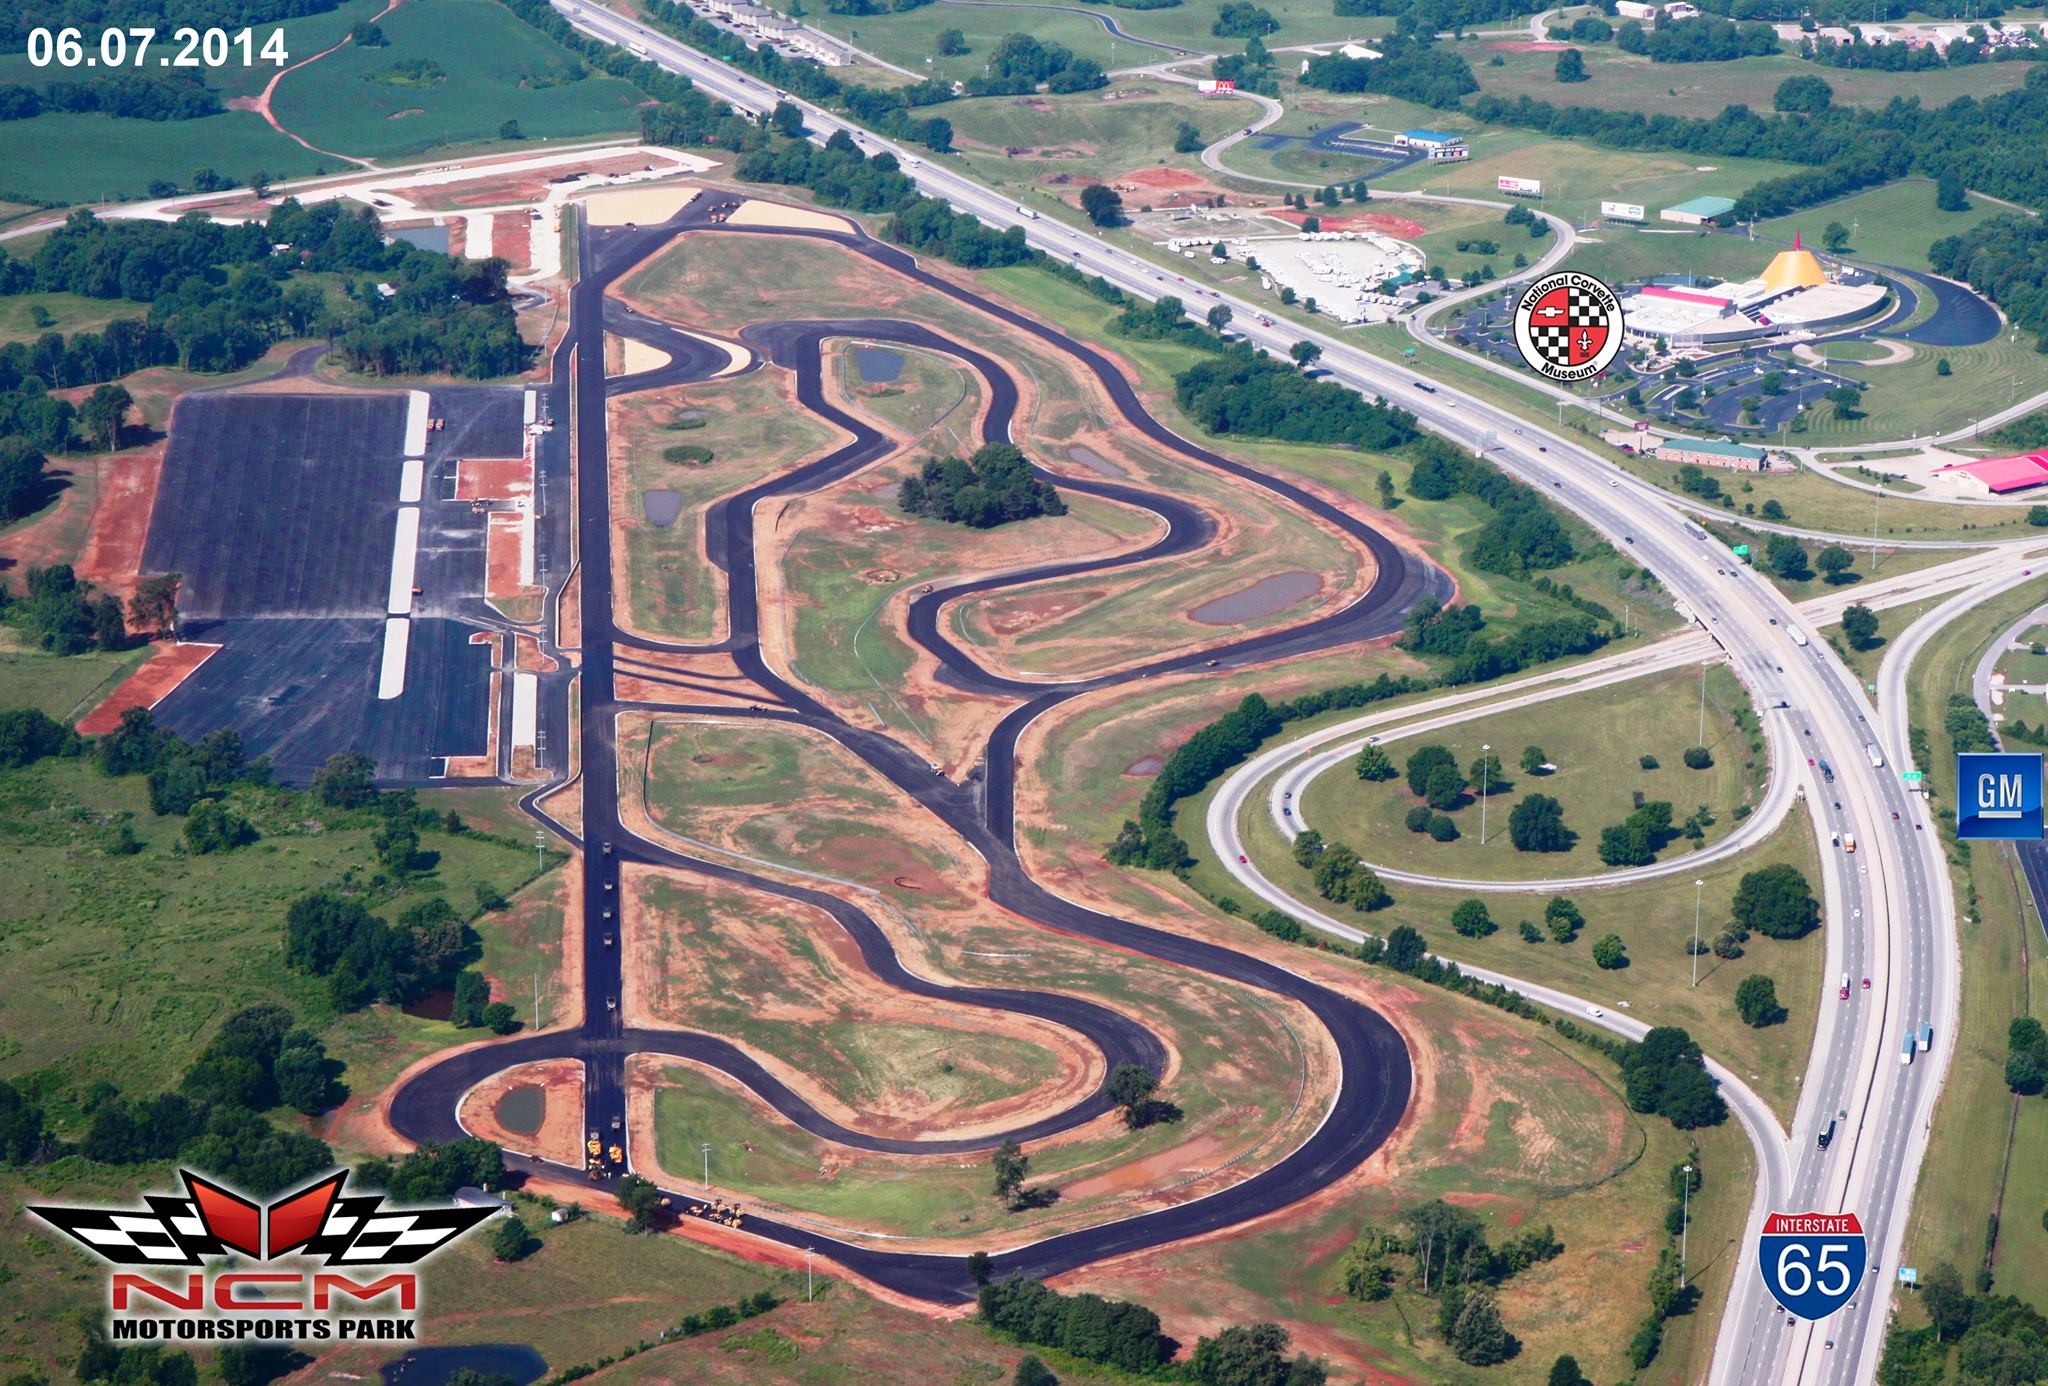 www.motorsportspark.org